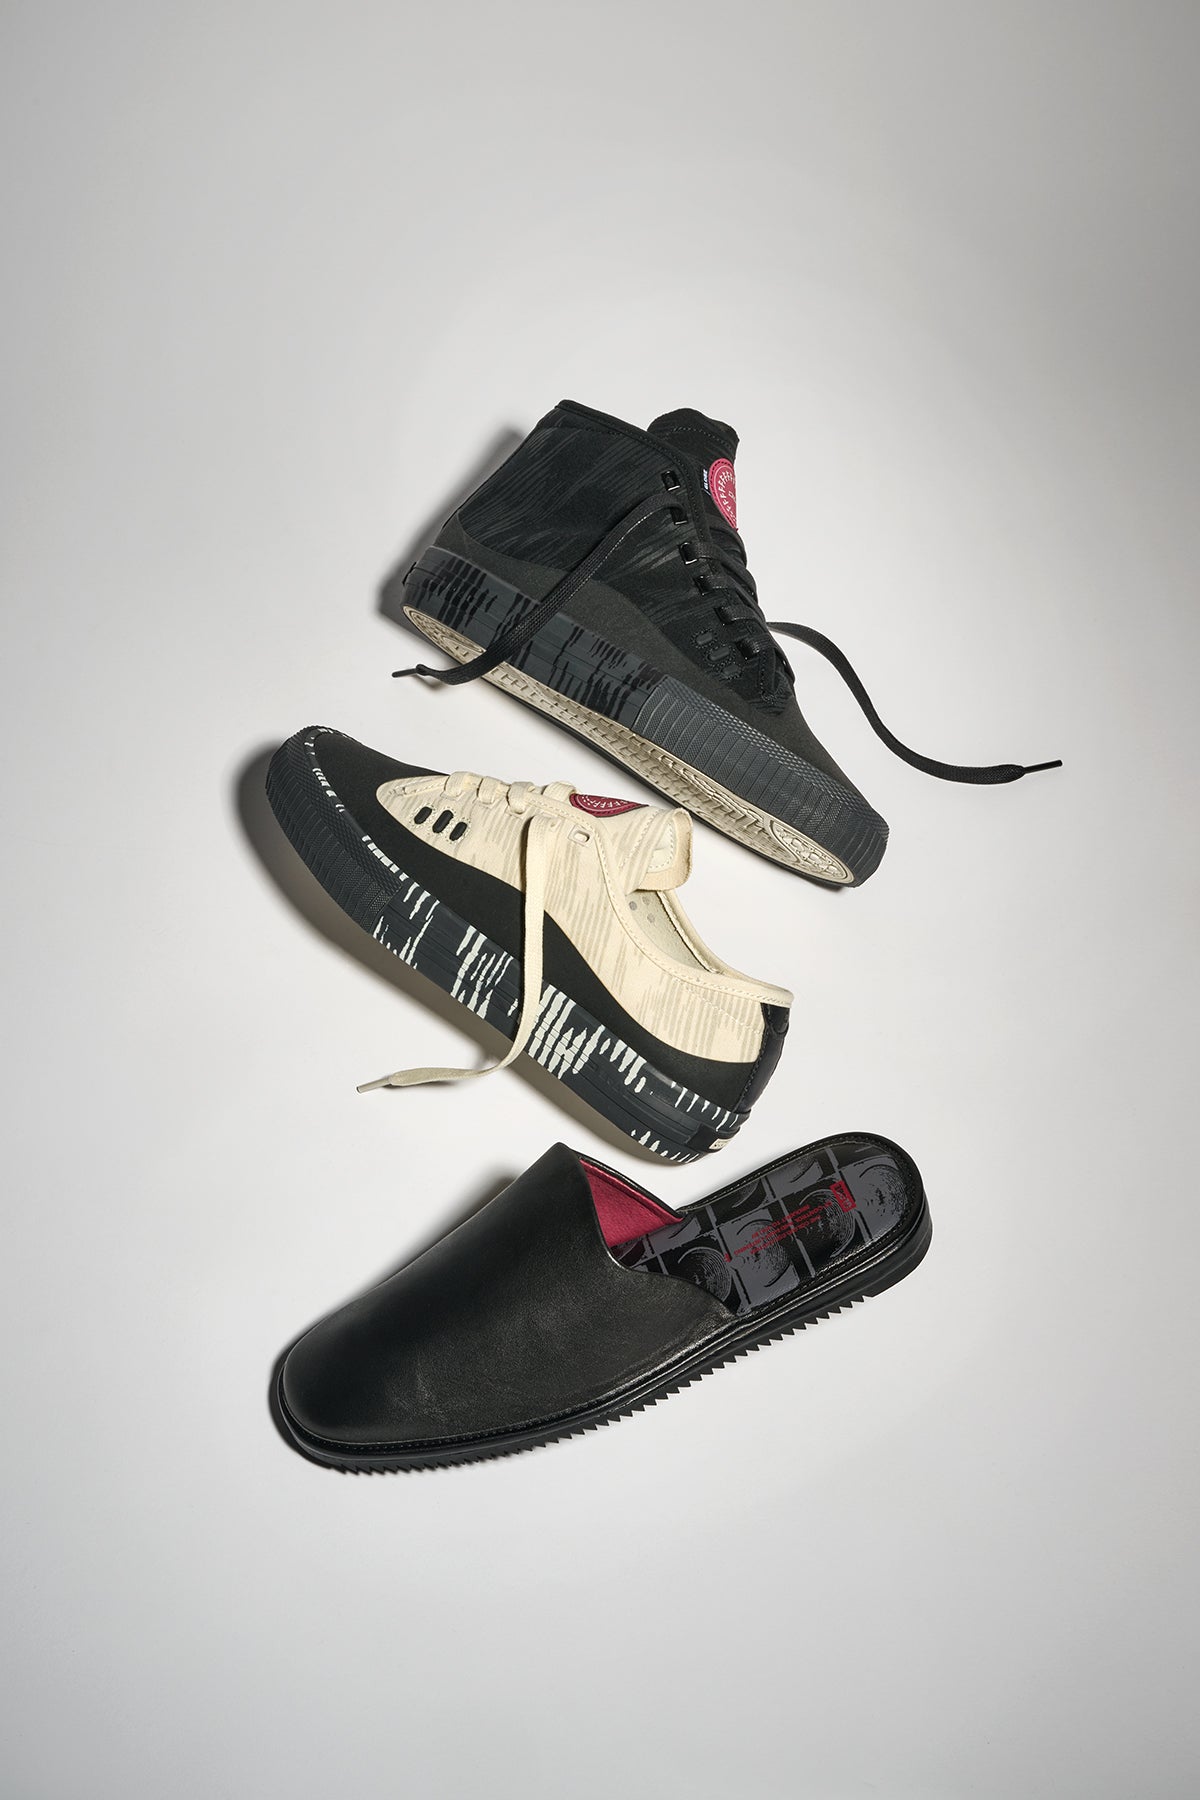 Globe - Mule - Black/Former - Skate Shoes